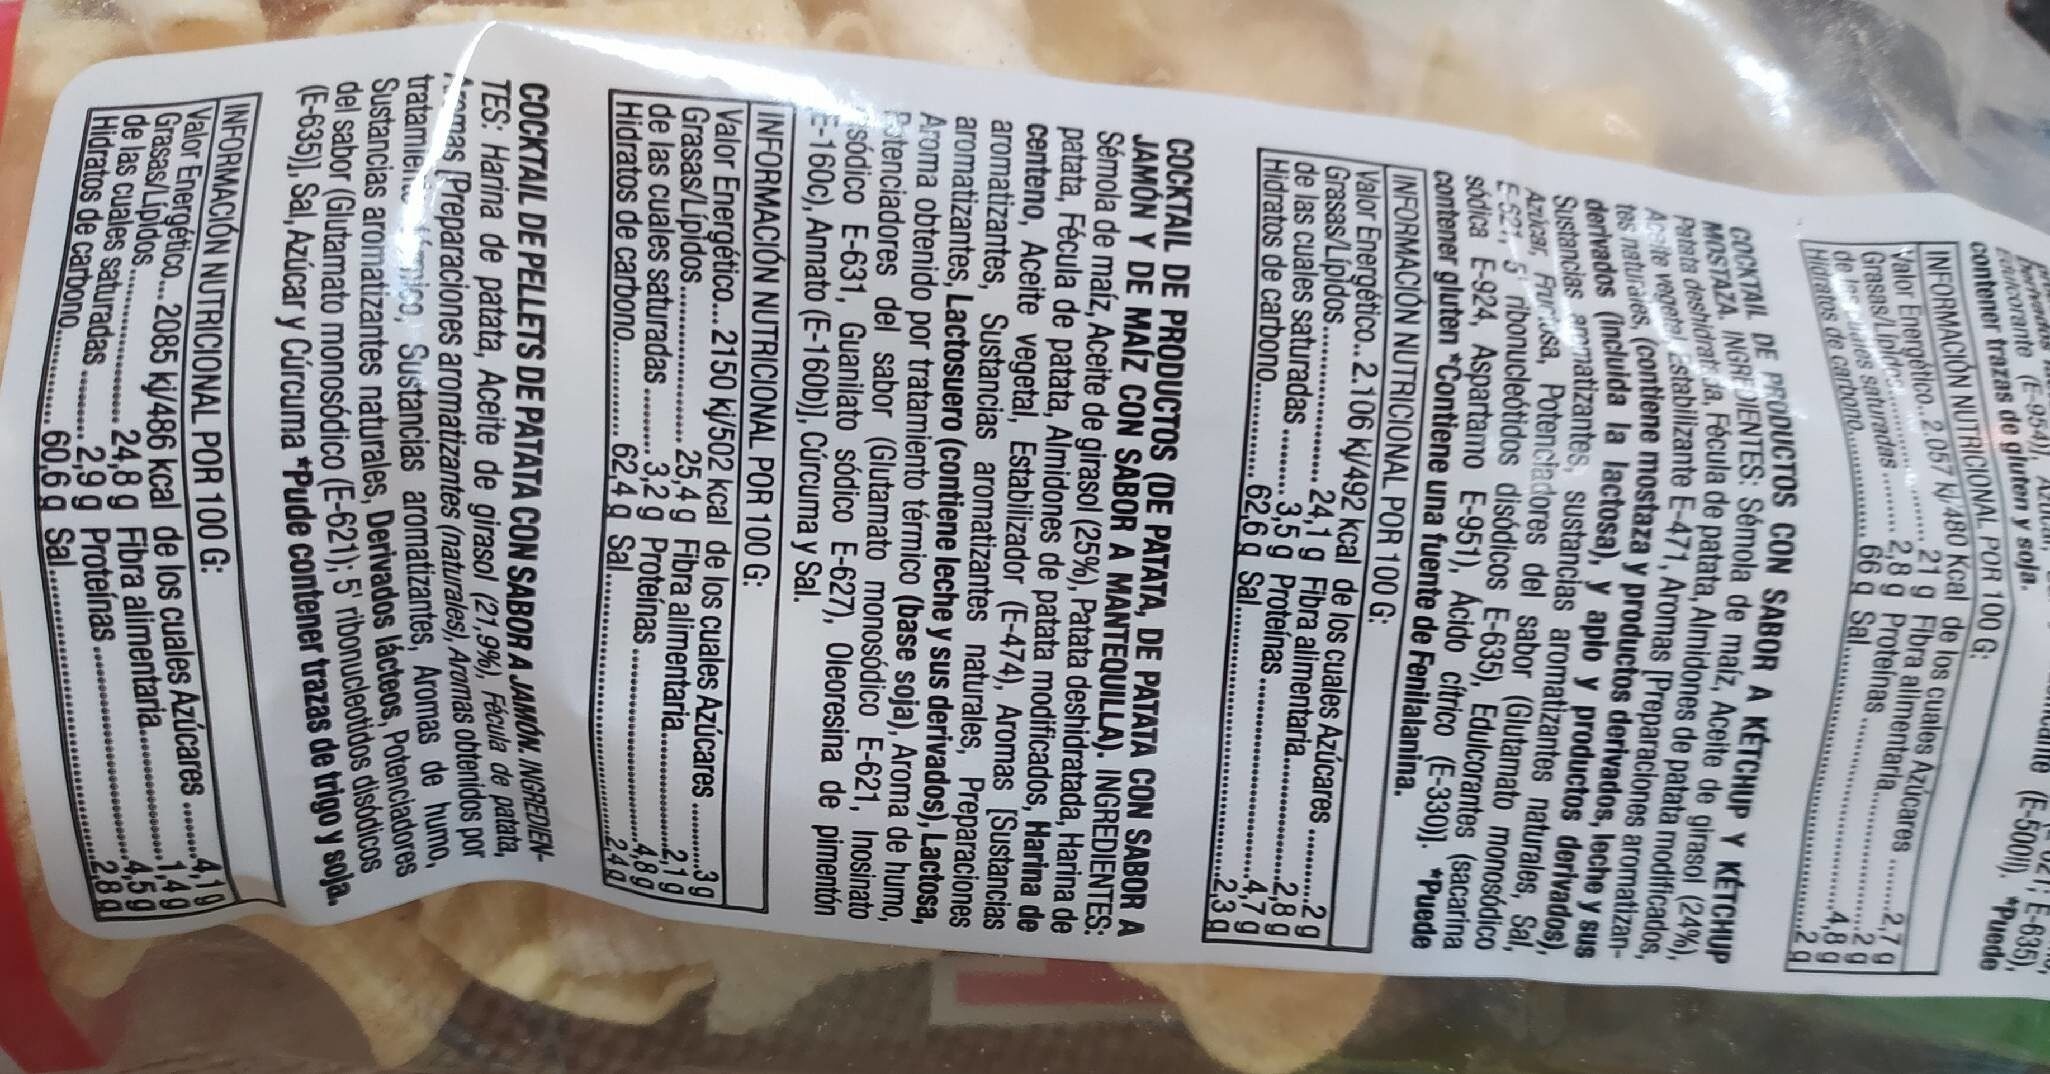 Cocktail de pellets sabor jamón - Informació nutricional - es